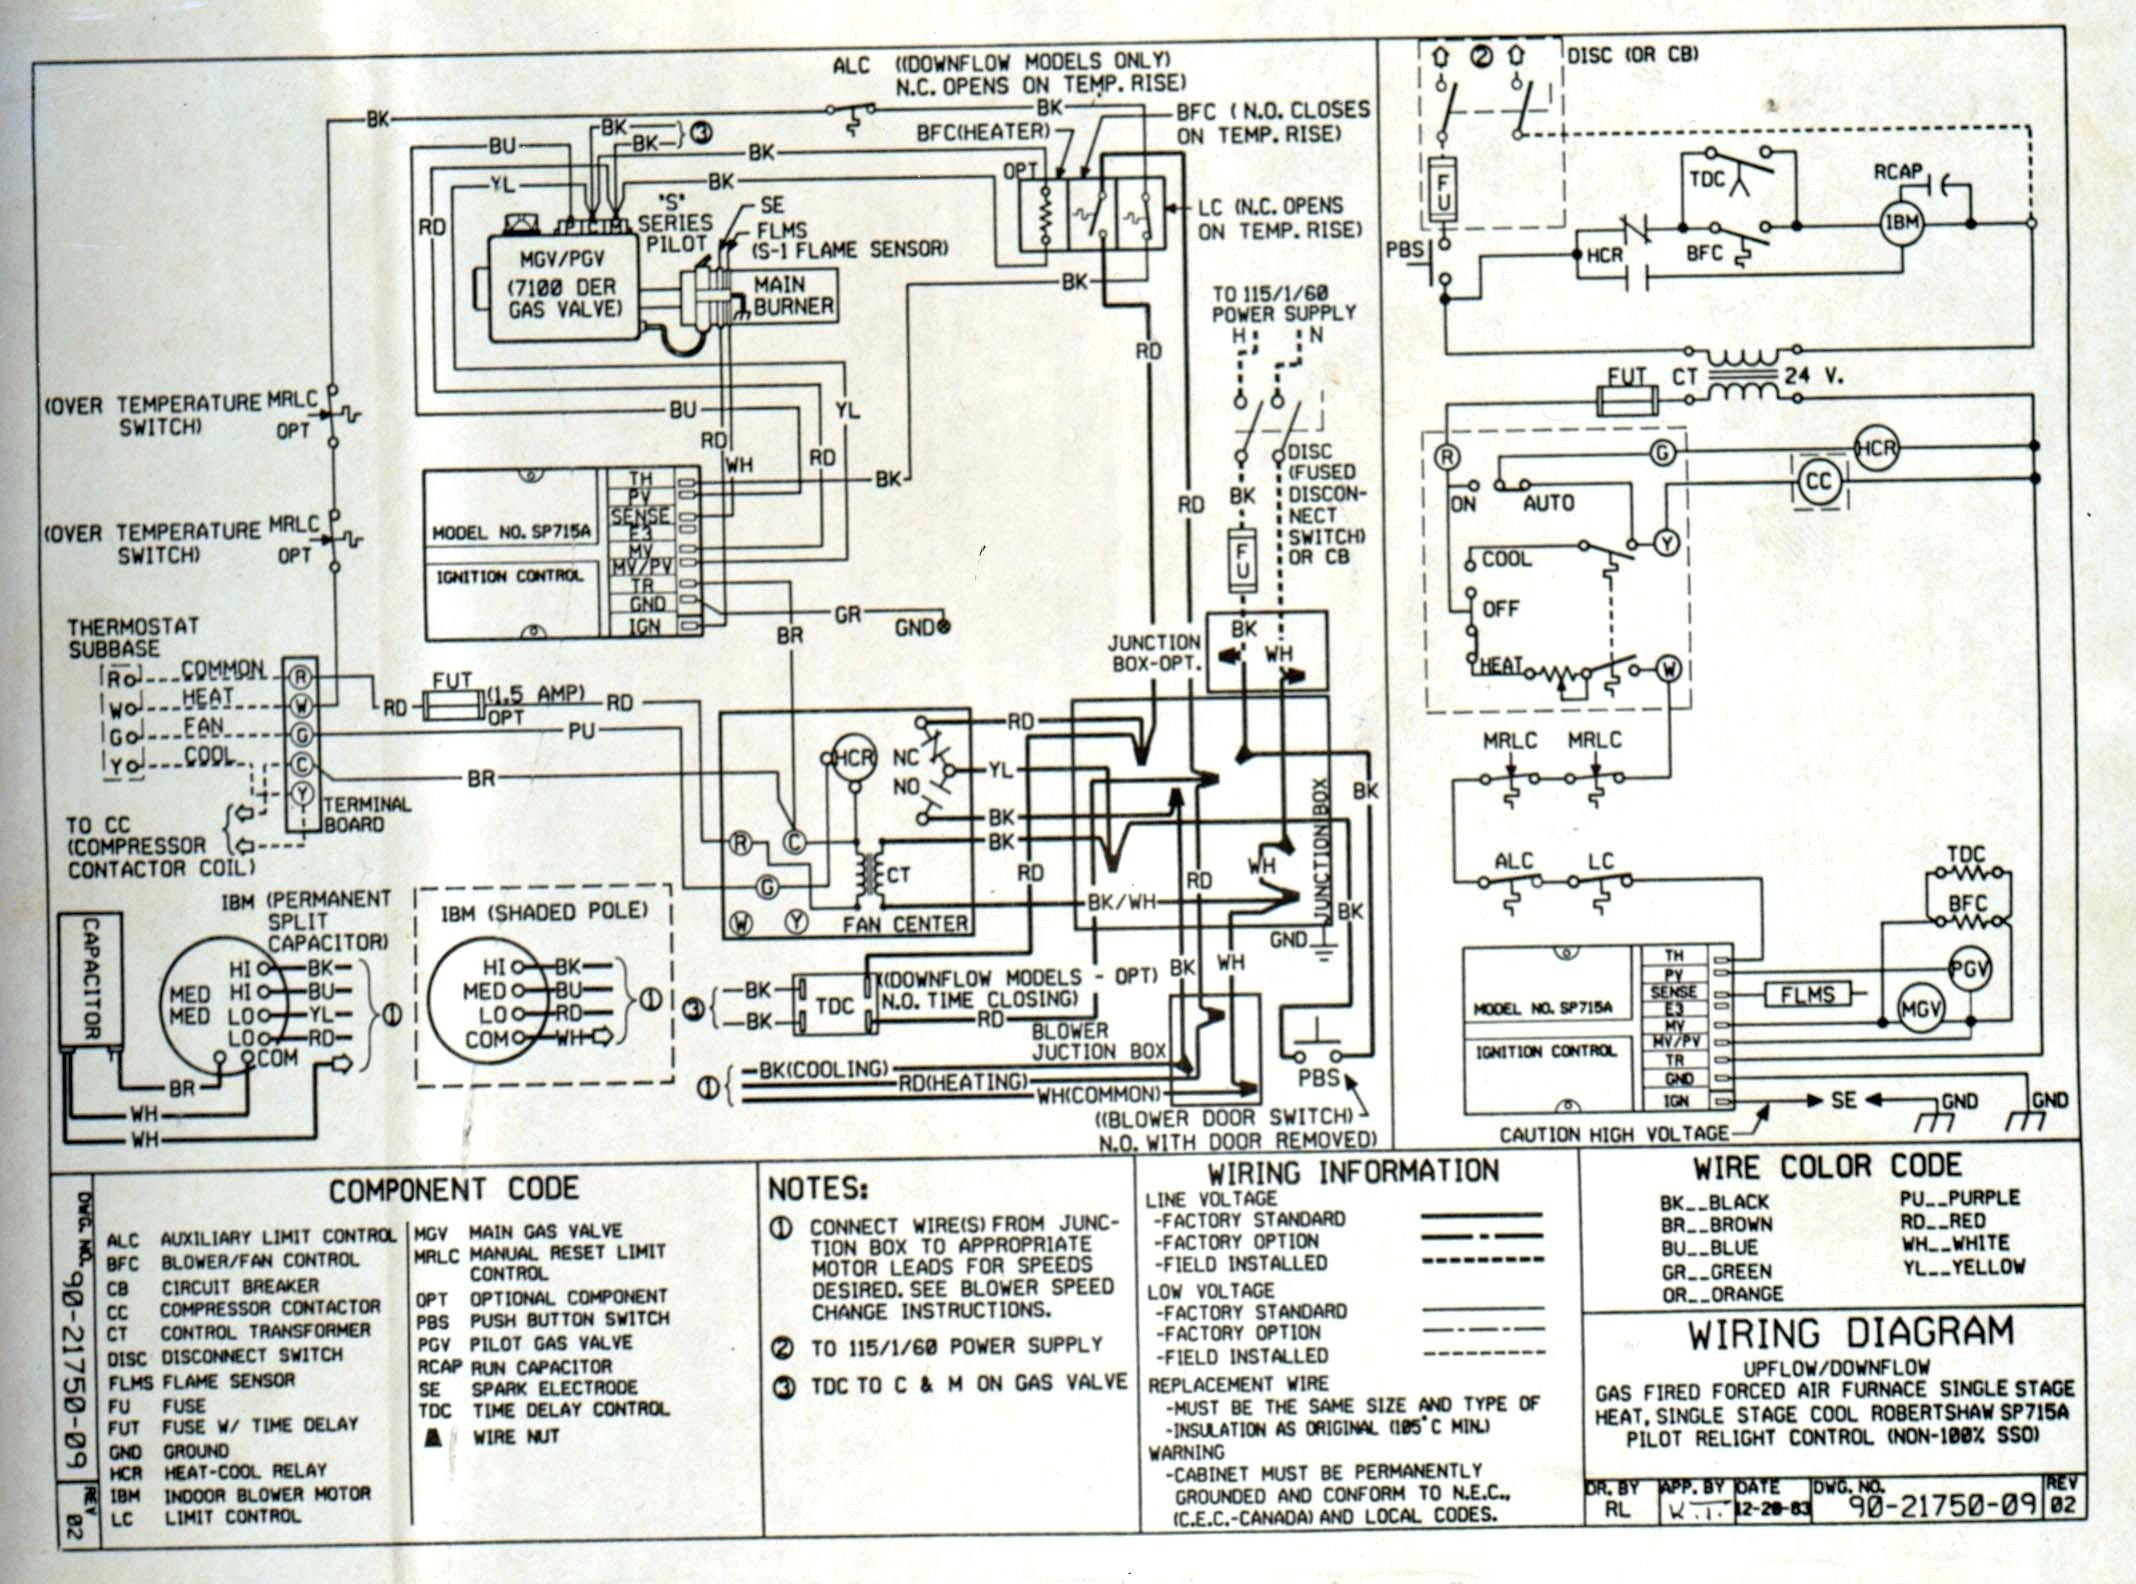 Air Conditioner thermostat Wiring Diagram Beautiful Goodman Furnace Wiring Diagram Manual Air Handler In Image